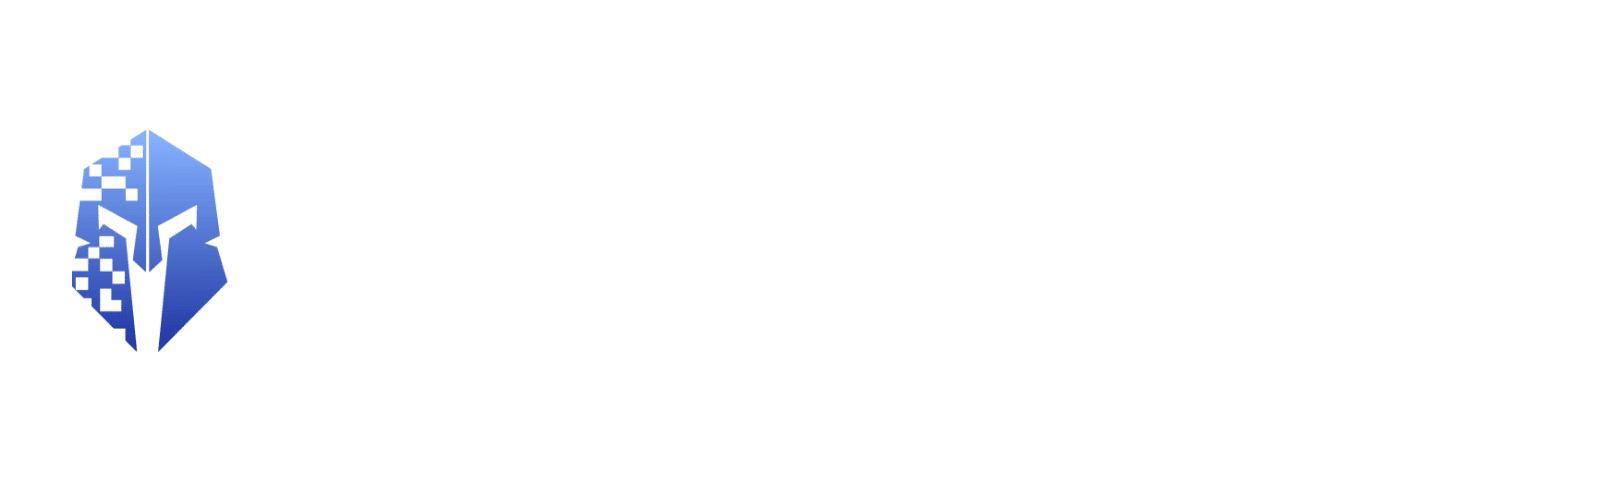 Interpres Logo White